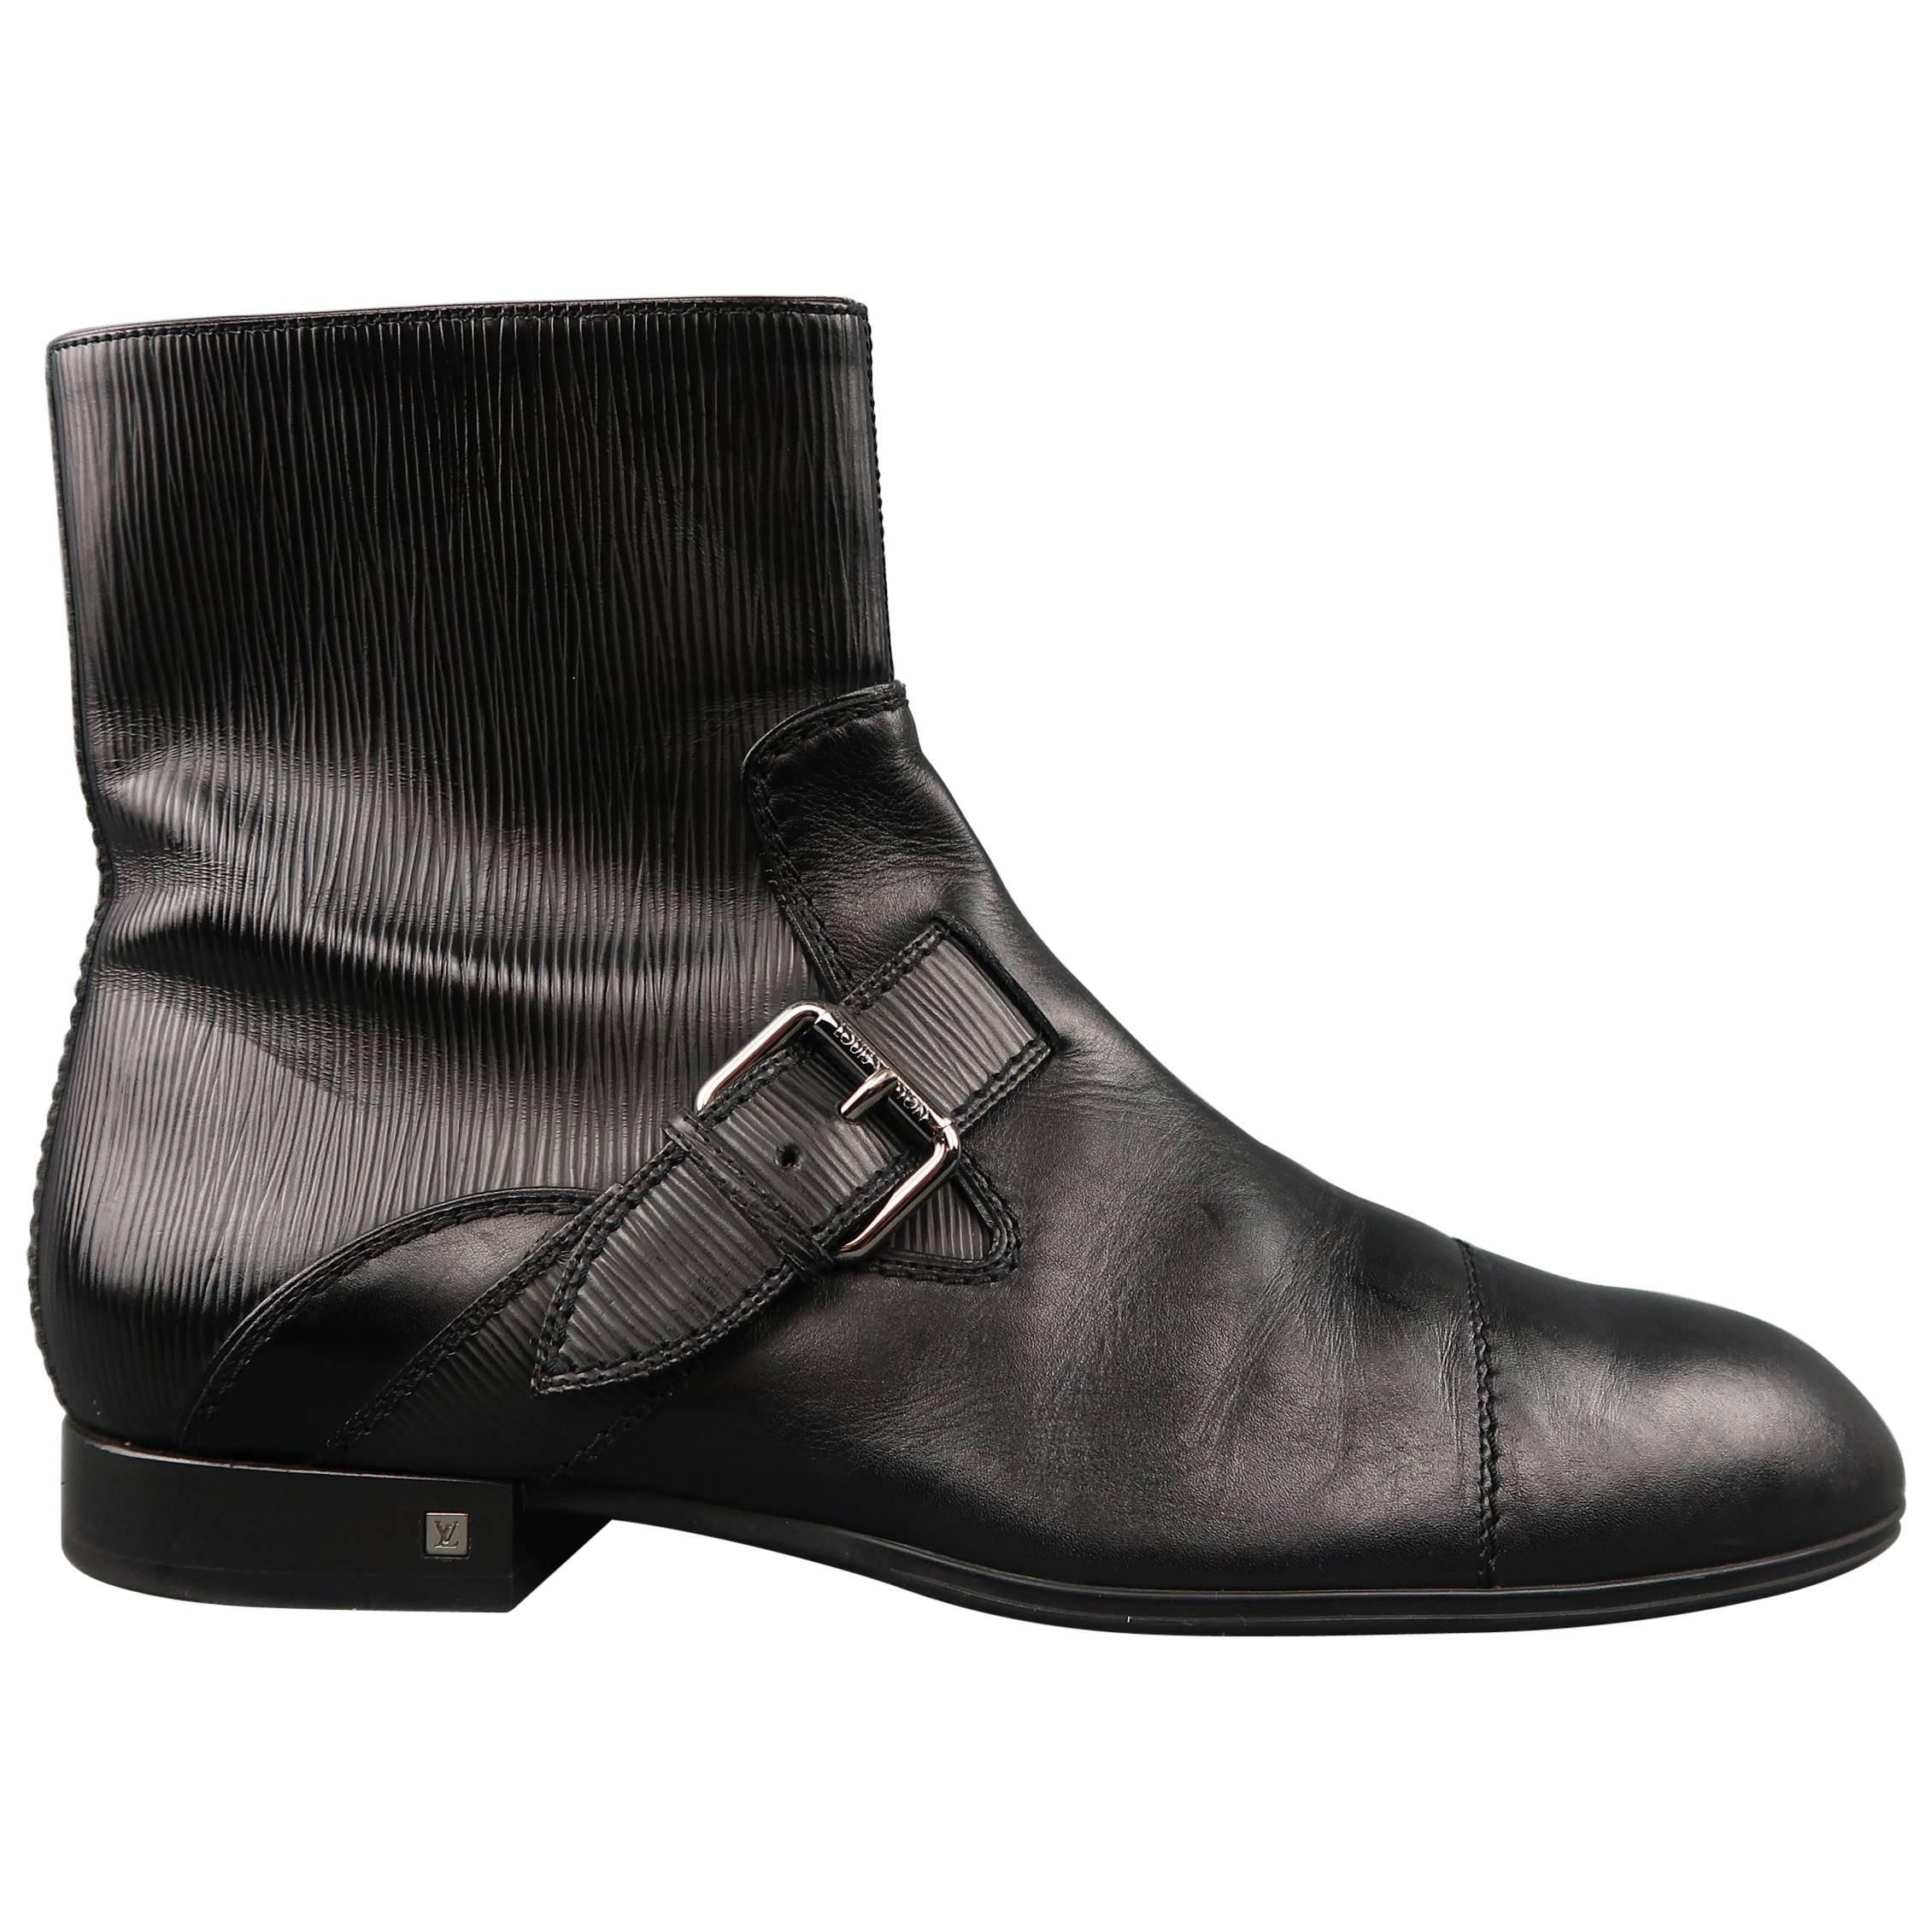 Louis Vuitton Black Ankle Boots for Men for Sale, Shop New & Used Men's  Boots